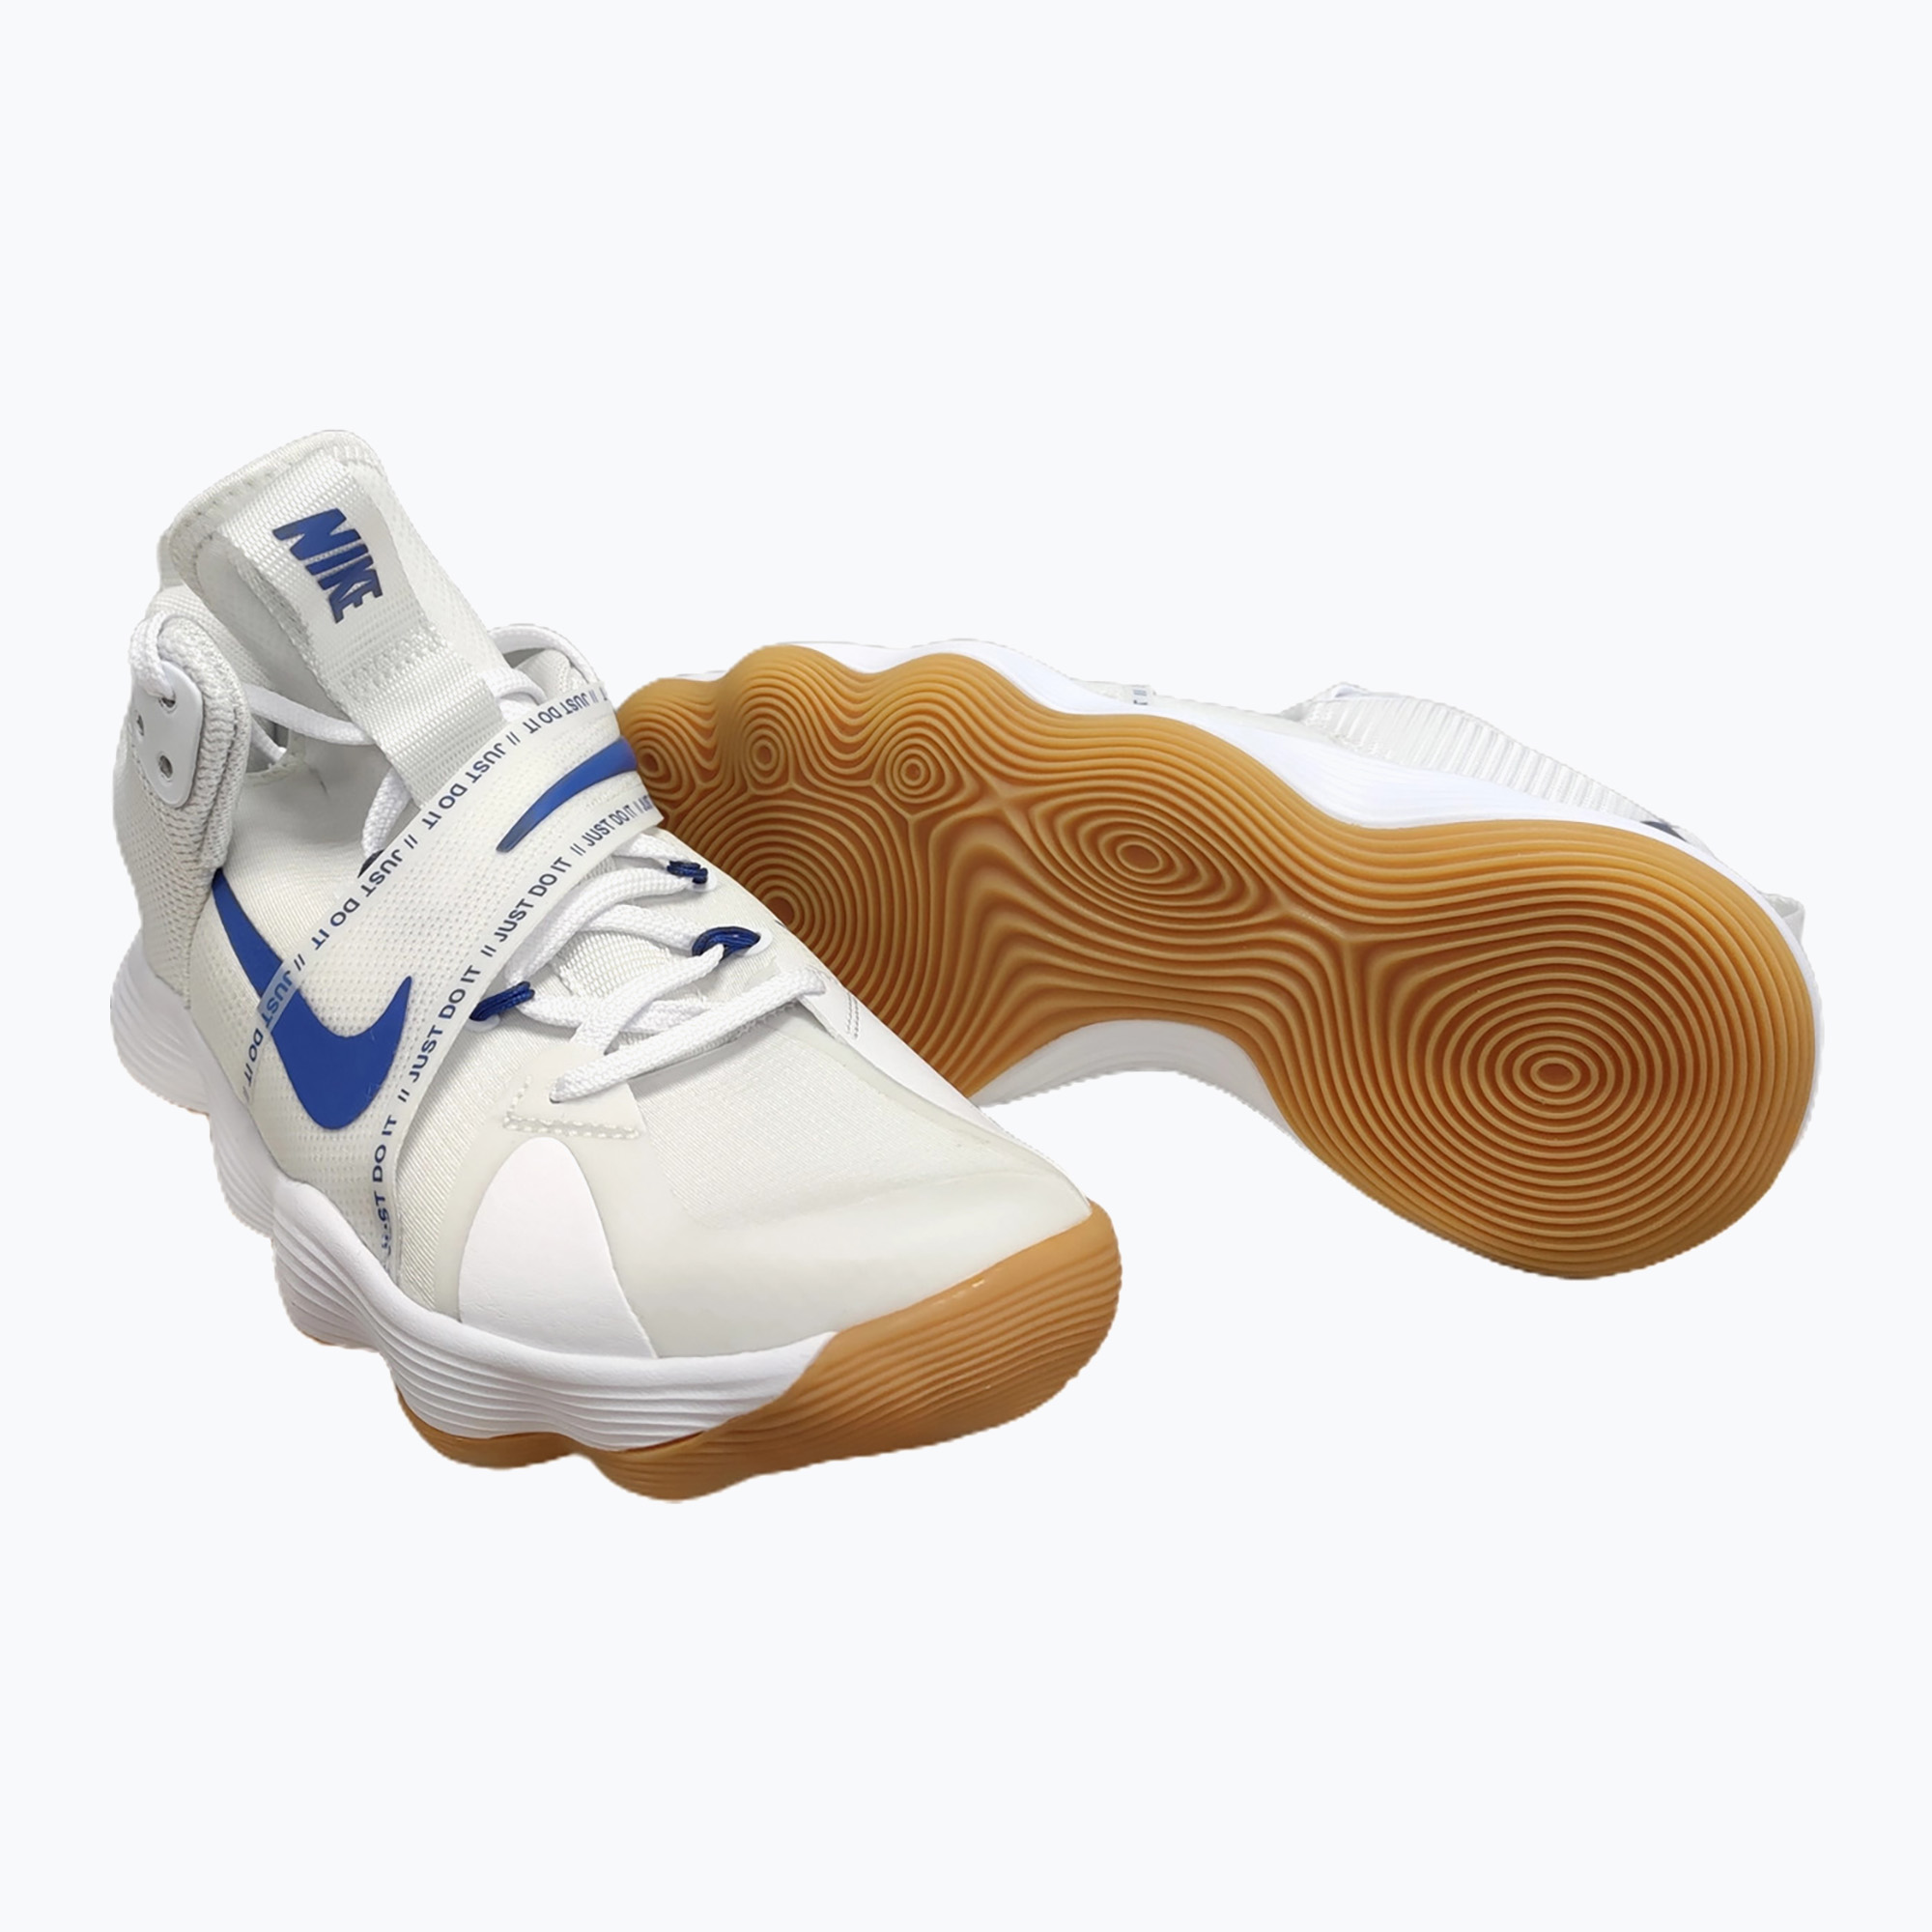 Volejbalová obuv Nike React Hyperset white/game royal